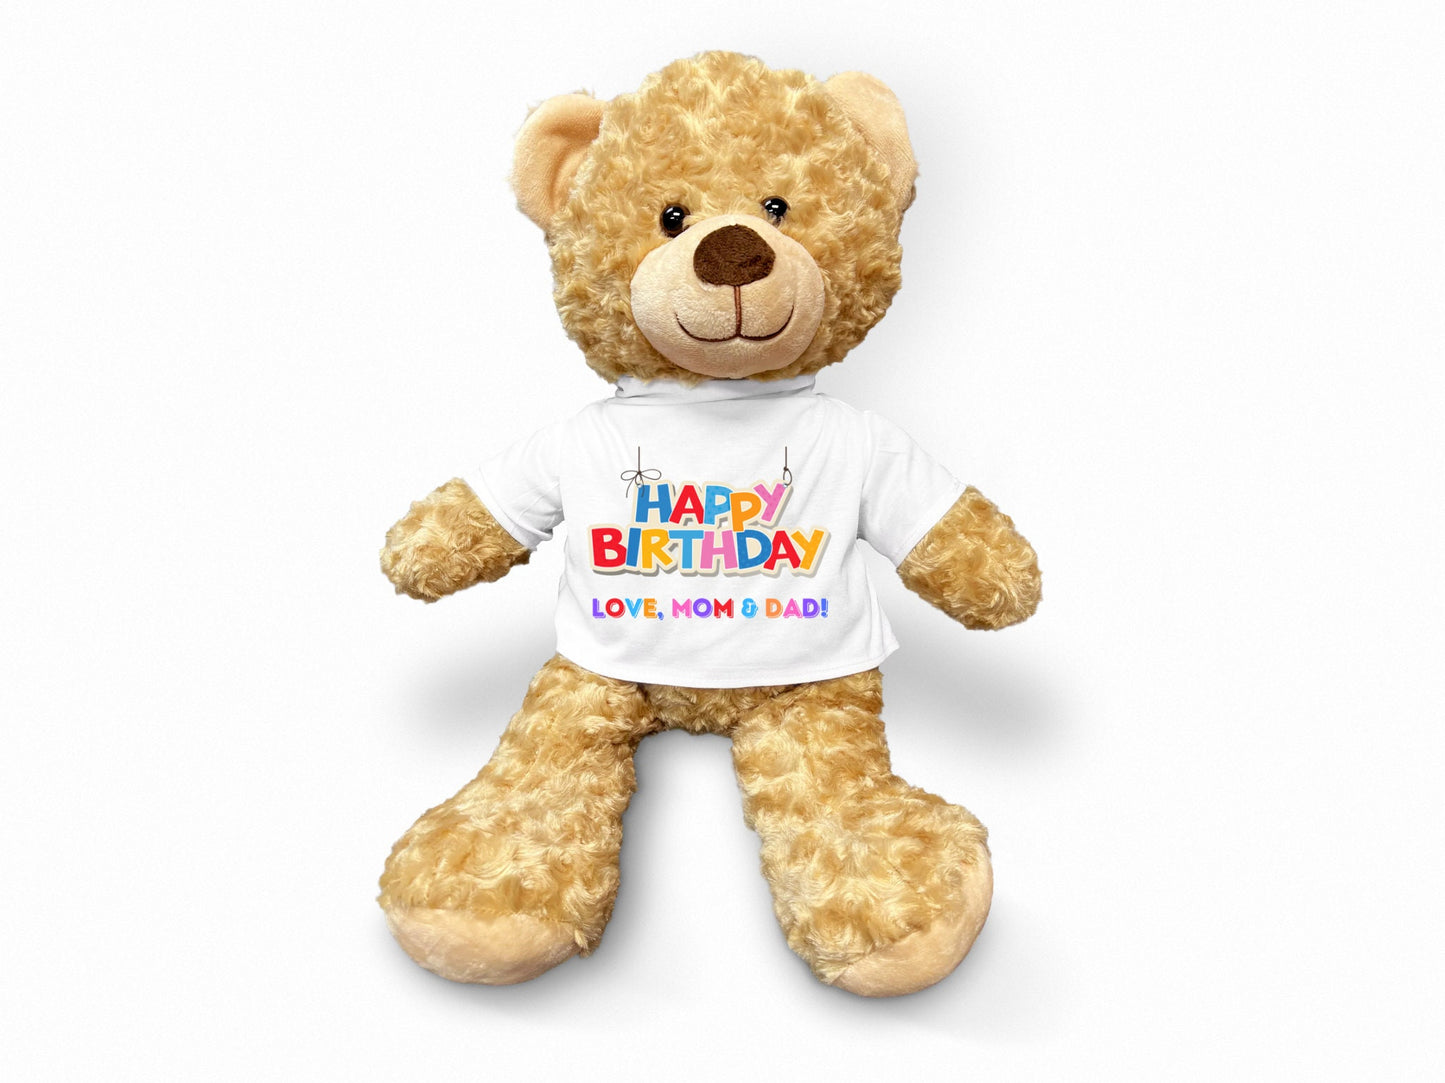 Personalized Birthday Teddy Bear - Custom Name for a Unique Gift, Plush Birthday Teddy Bear, Birthday Boy, Birthday Girl Gifts